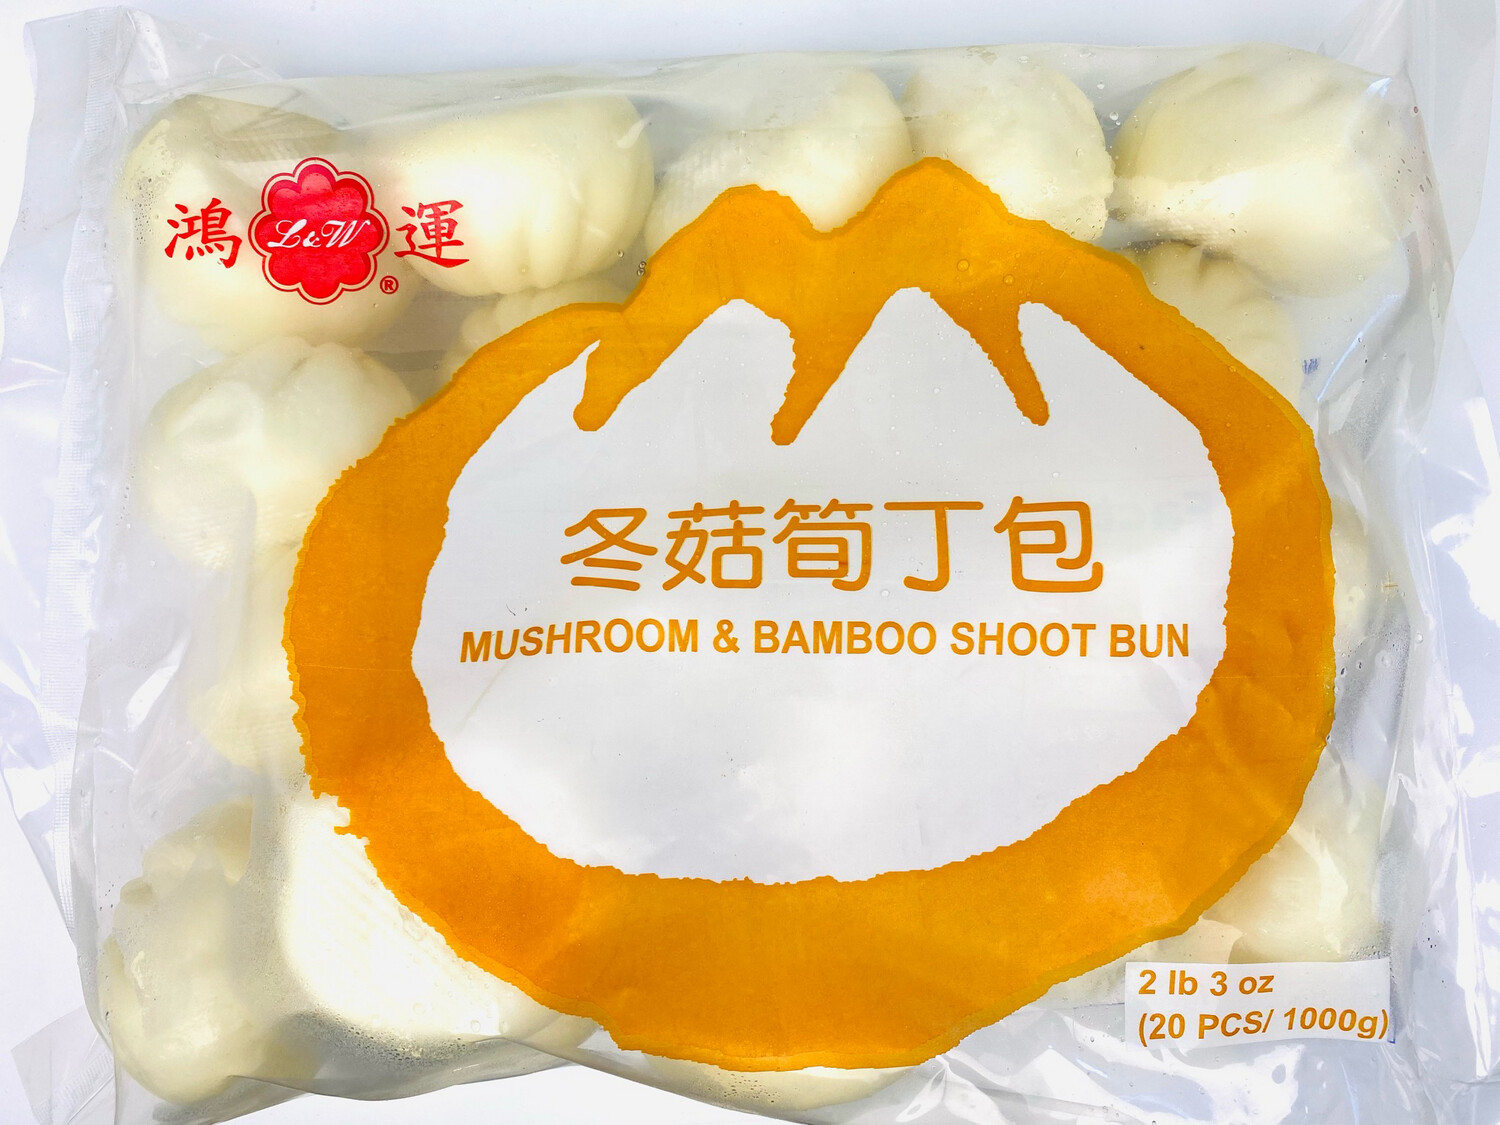 L&W Mushroom and Bamboo shoot bun 2lbs 鸿运 冬菇笋丁包 (散装20个)